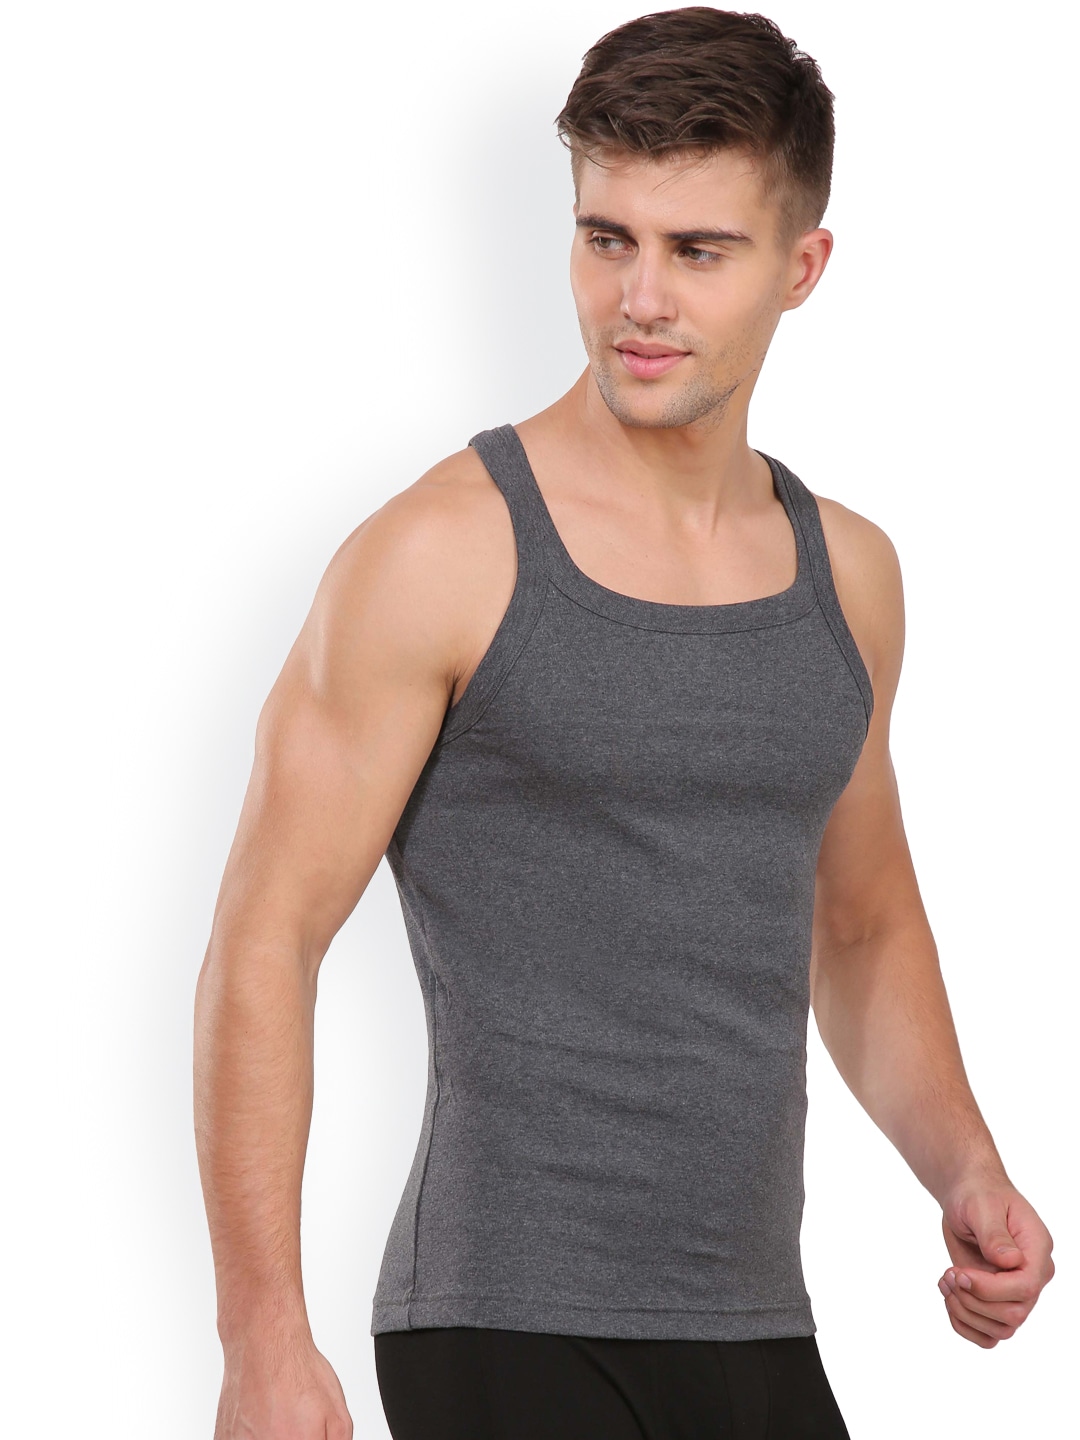 Clothing Innerwear Vests | Jockey Men Charcoal Grey Innerwear Vest US26-0105 - XC90745